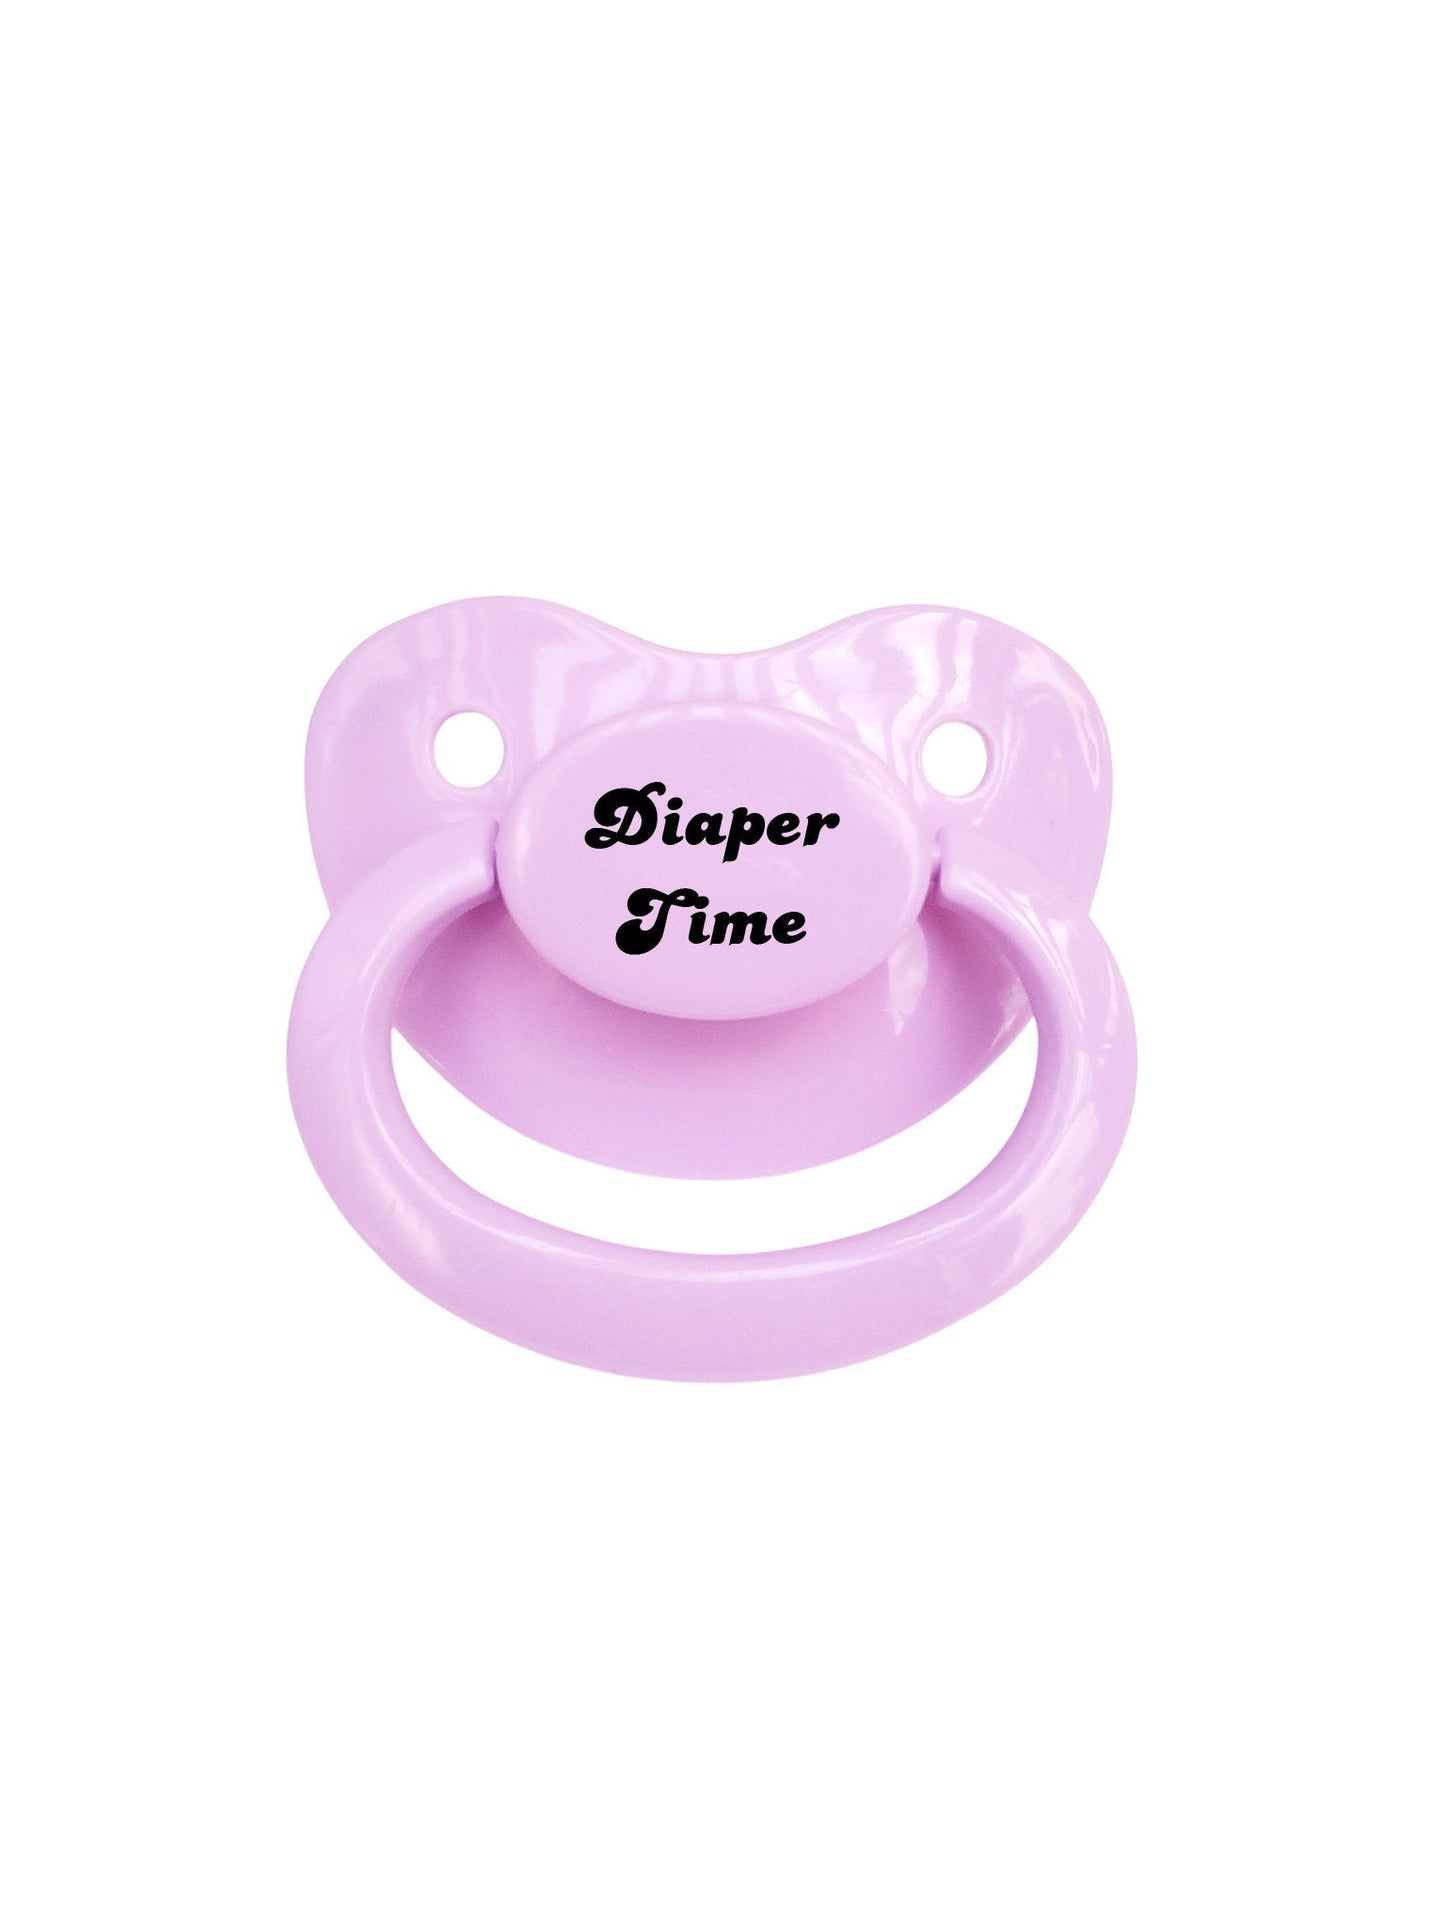 Diaper Time Adult Pacifier, ABDL Pacifier | Vixen's Hidden Desires